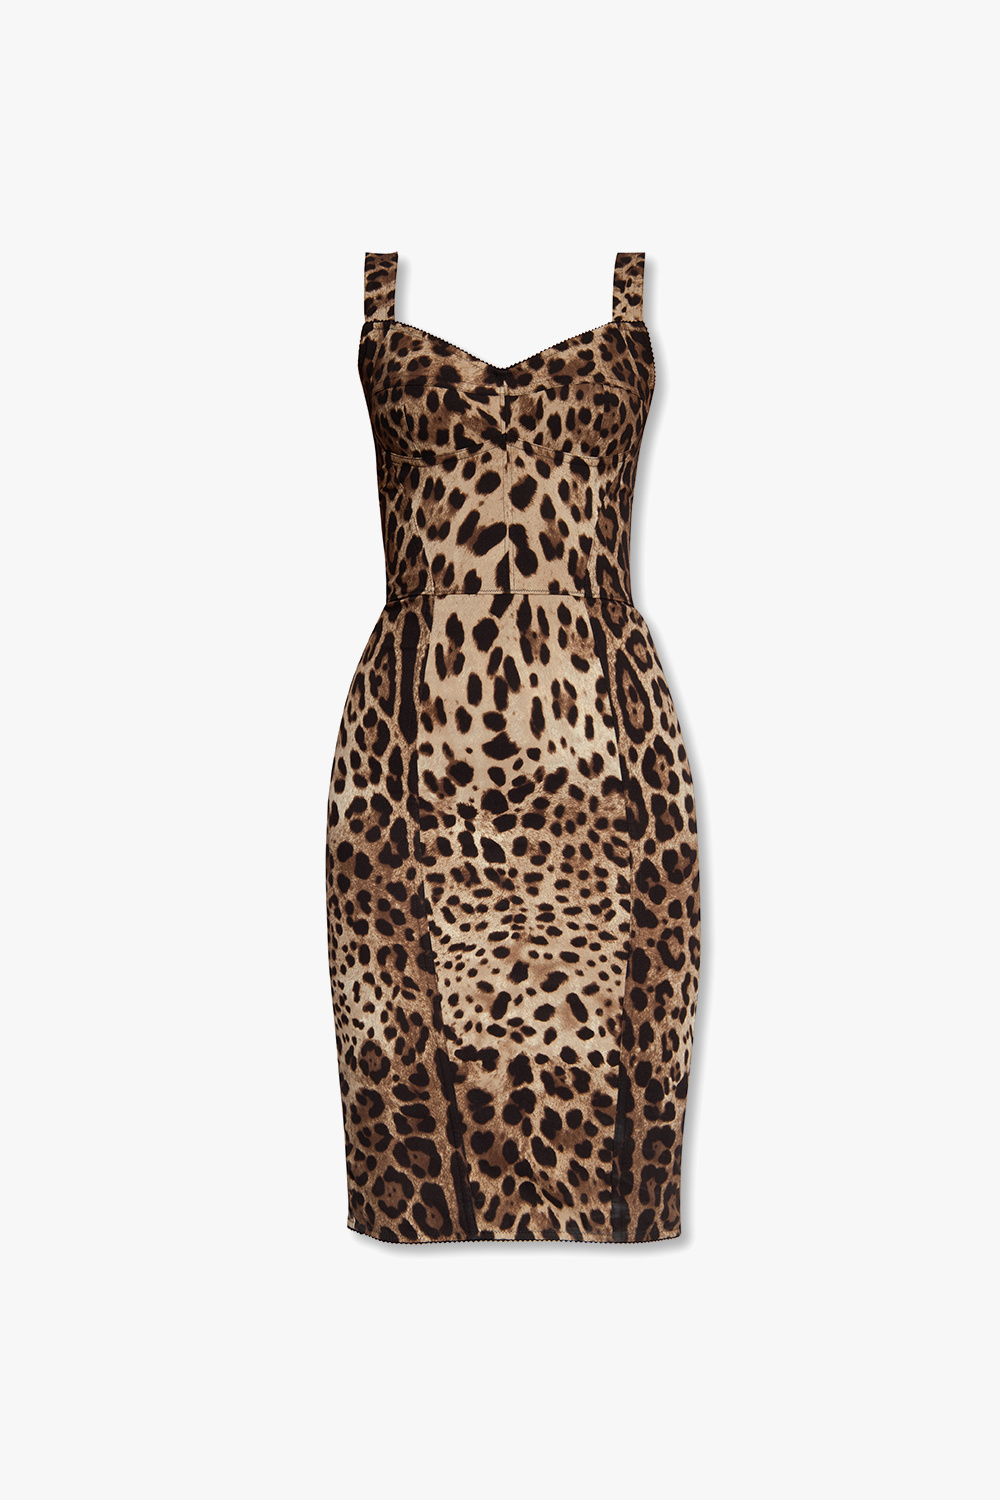 Dolce & Gabbana Dress with animal pattern